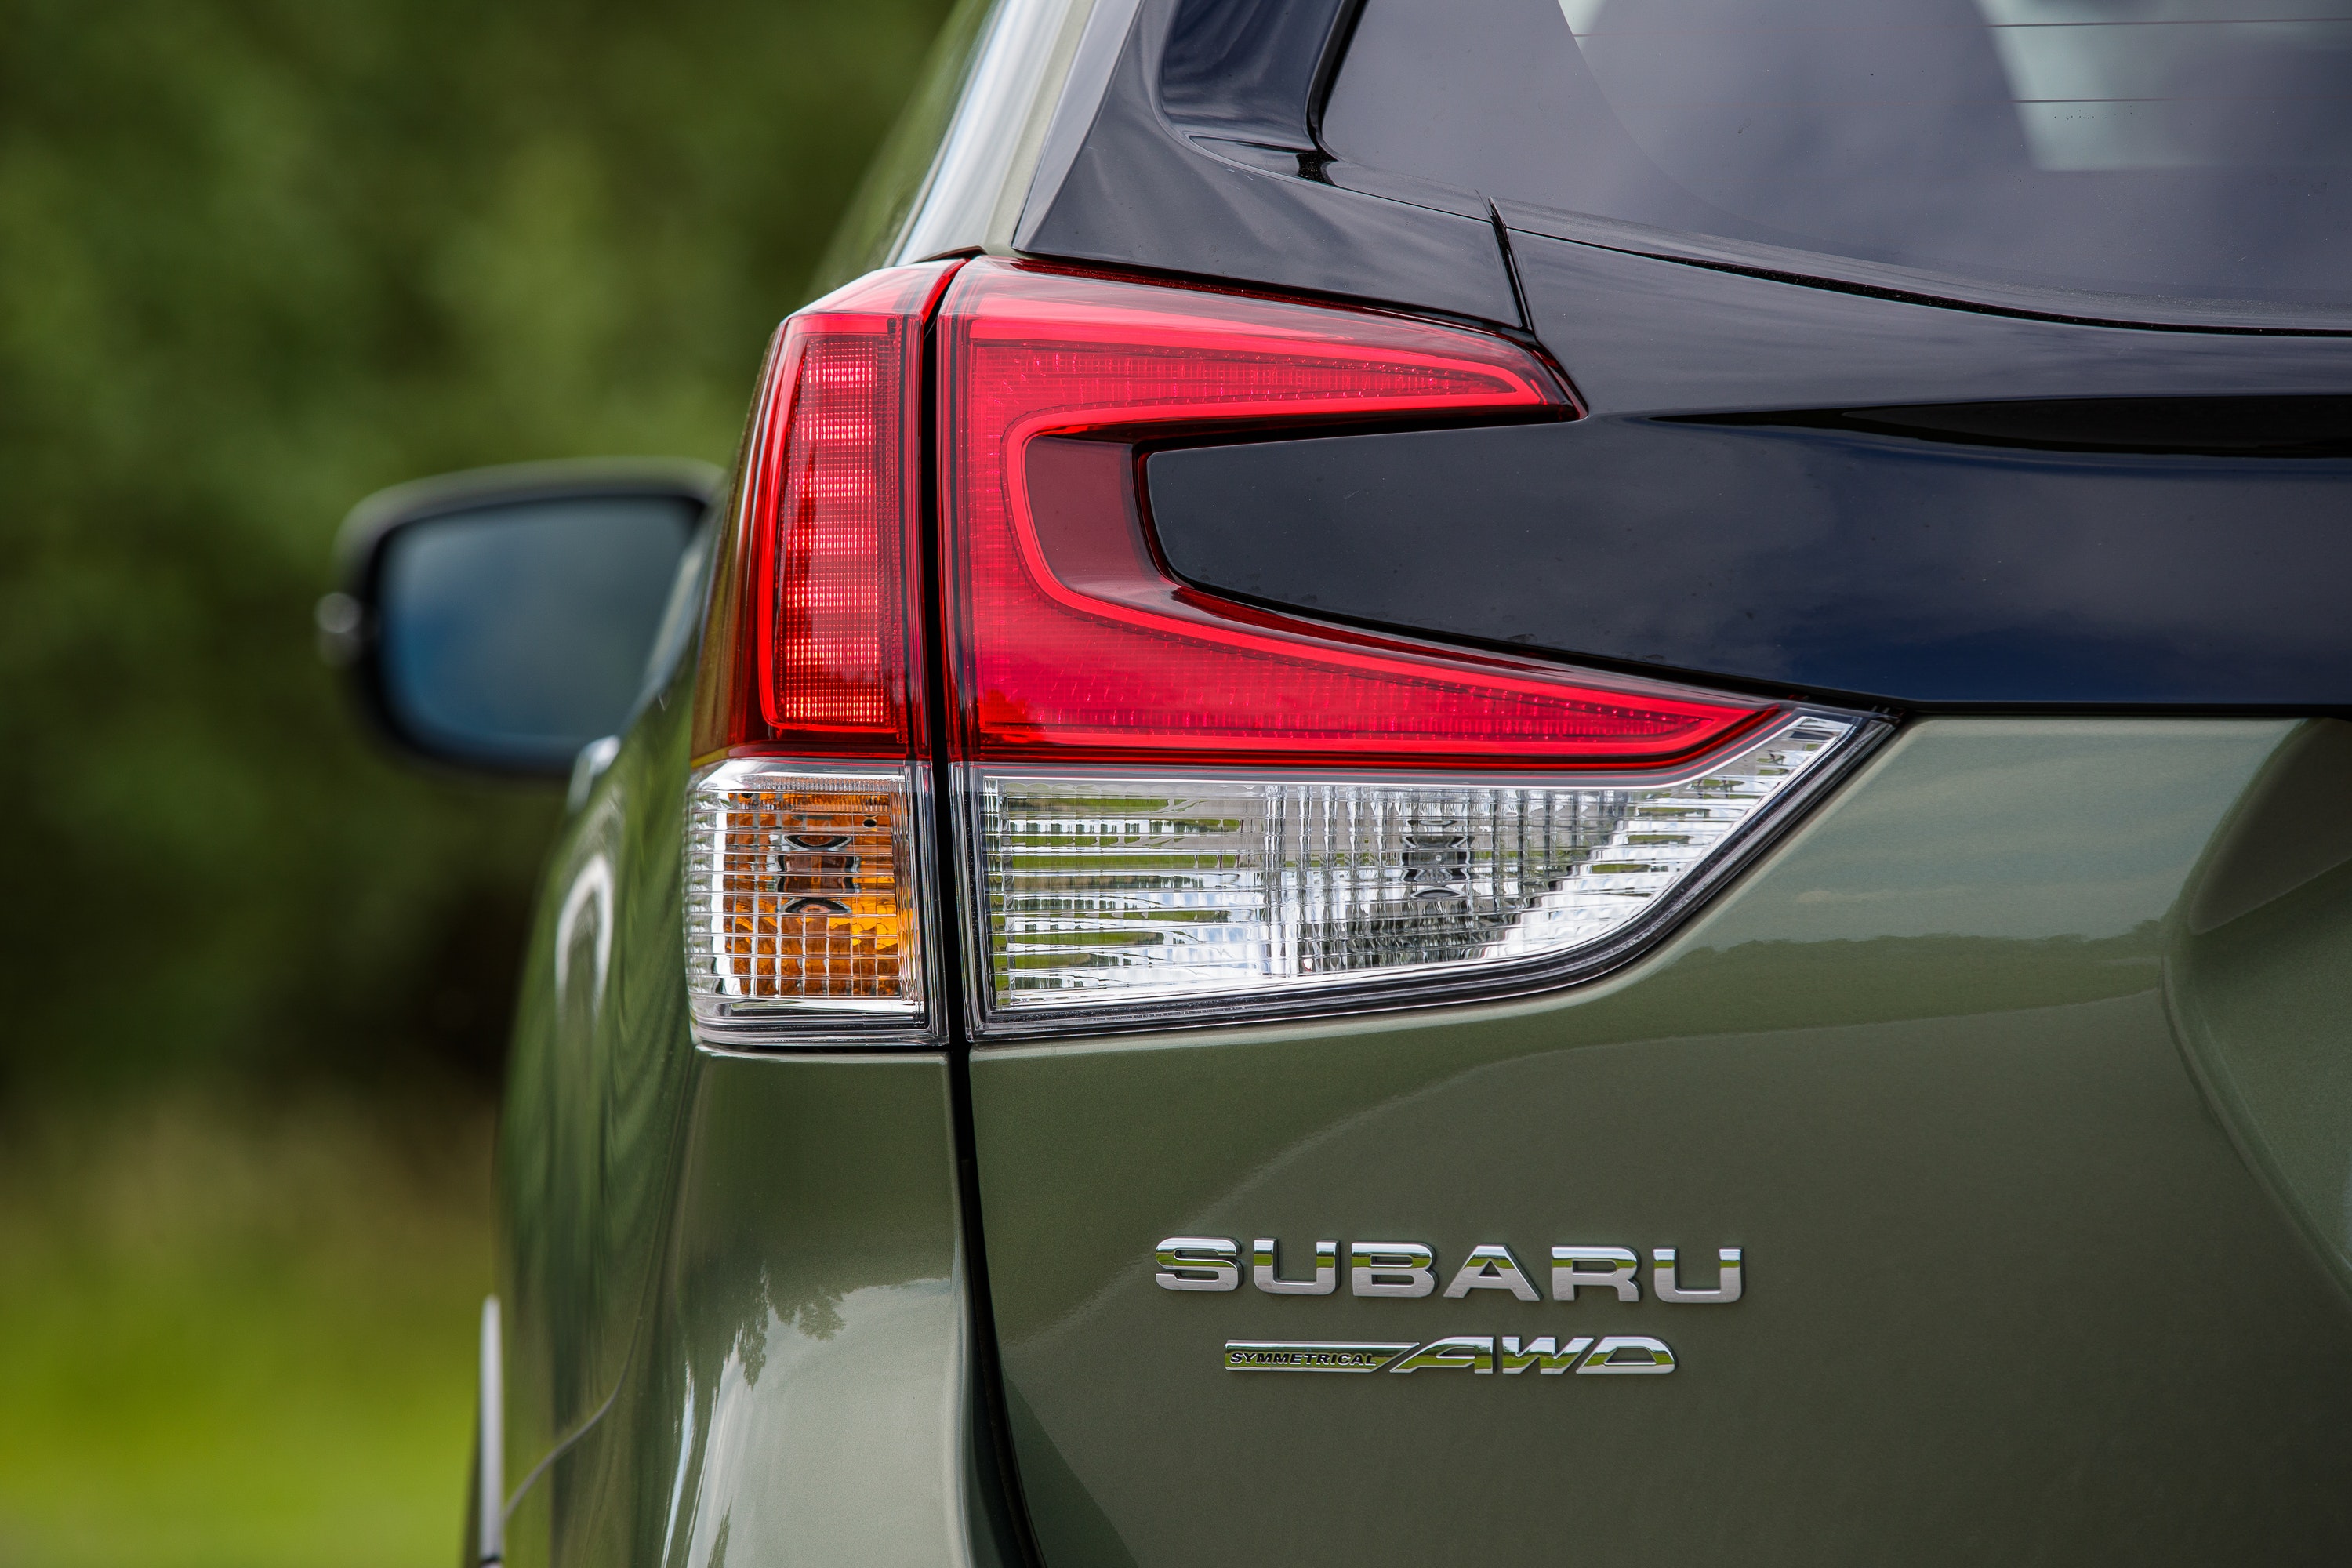 Subaru Forester close of of headlight